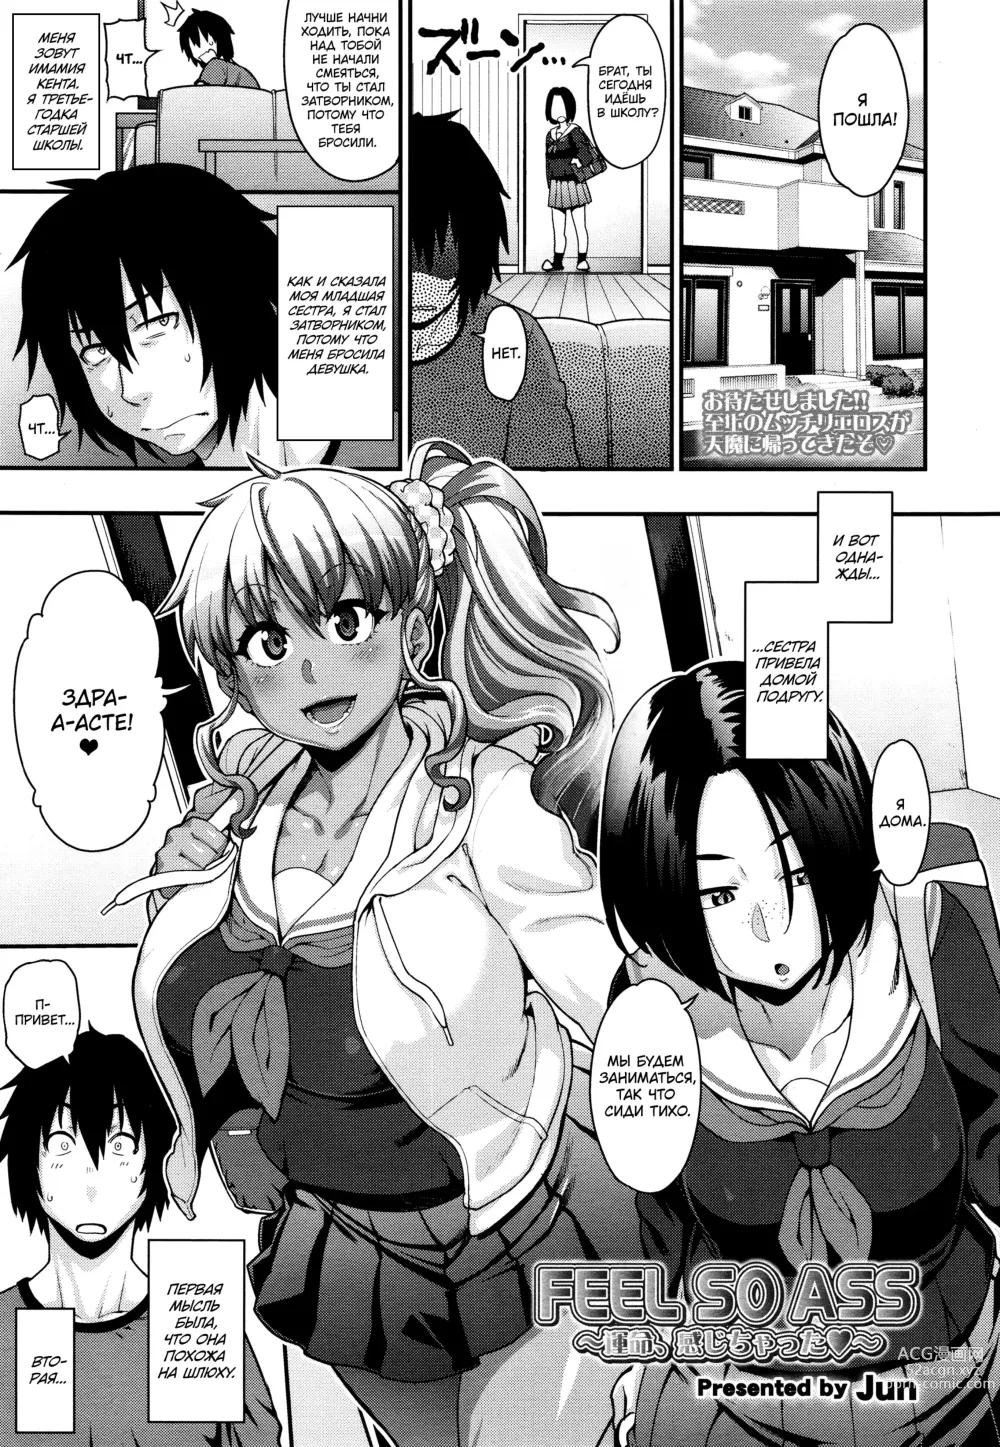 Page 1 of manga FEEL SO ASS: Это была судьба